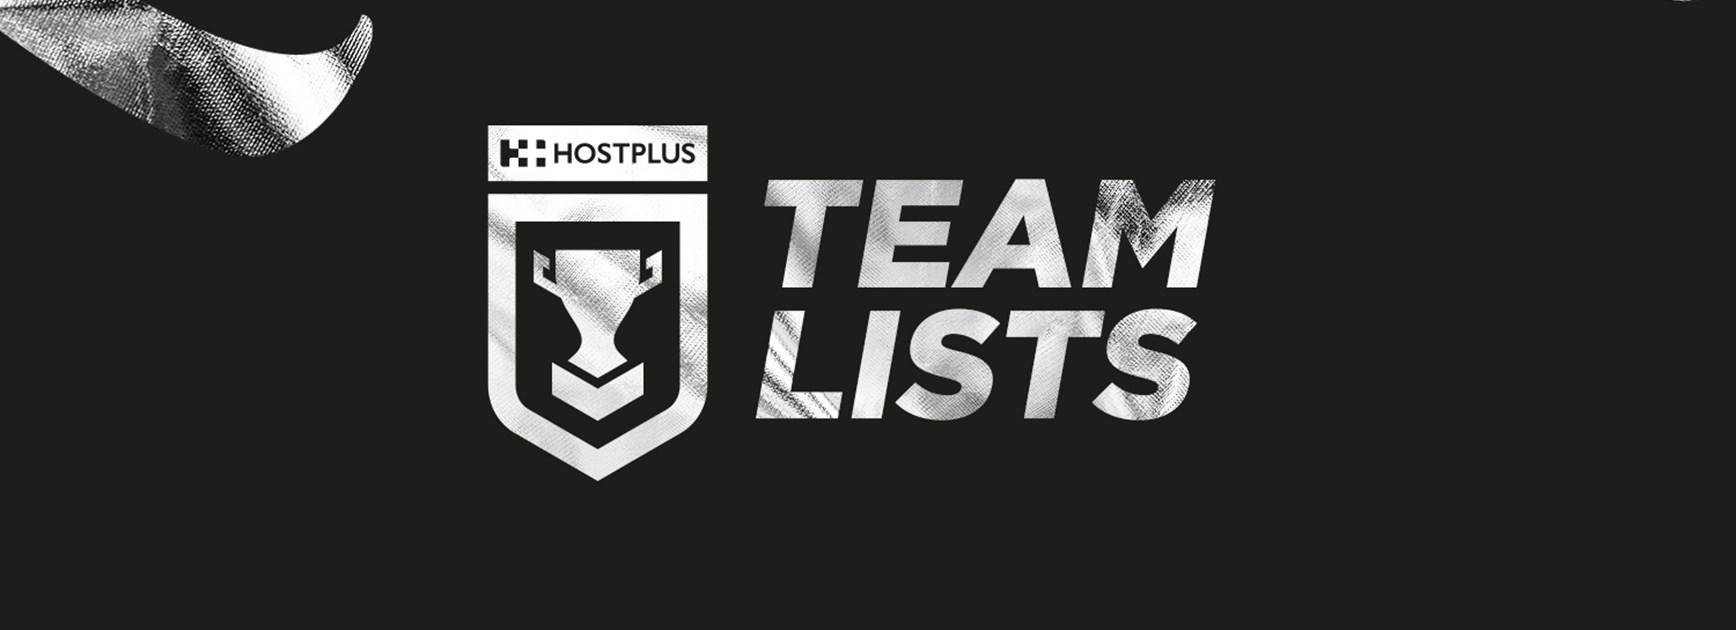 Round 8 Hostplus Cup team lists